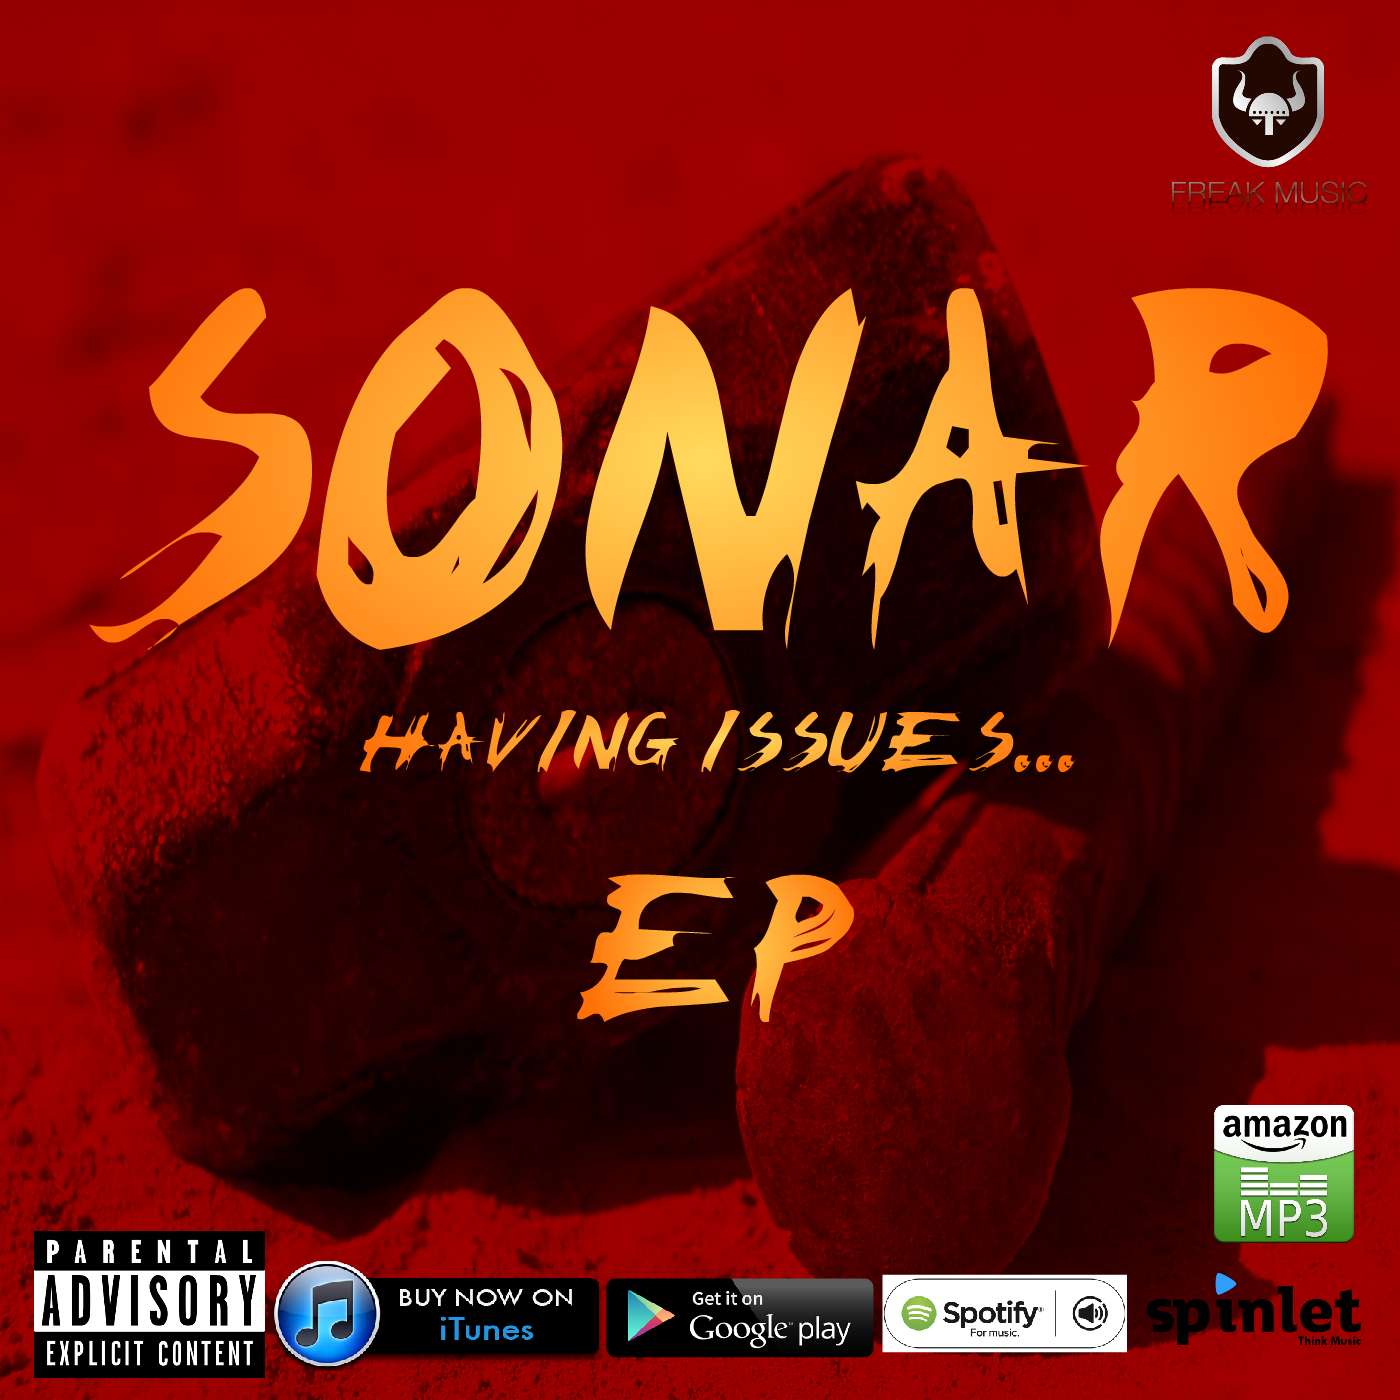 SONAR HAVING ISSUES PROMO 2 JPG - Sonar's Producer Album - Having Issues EP Finally out!!